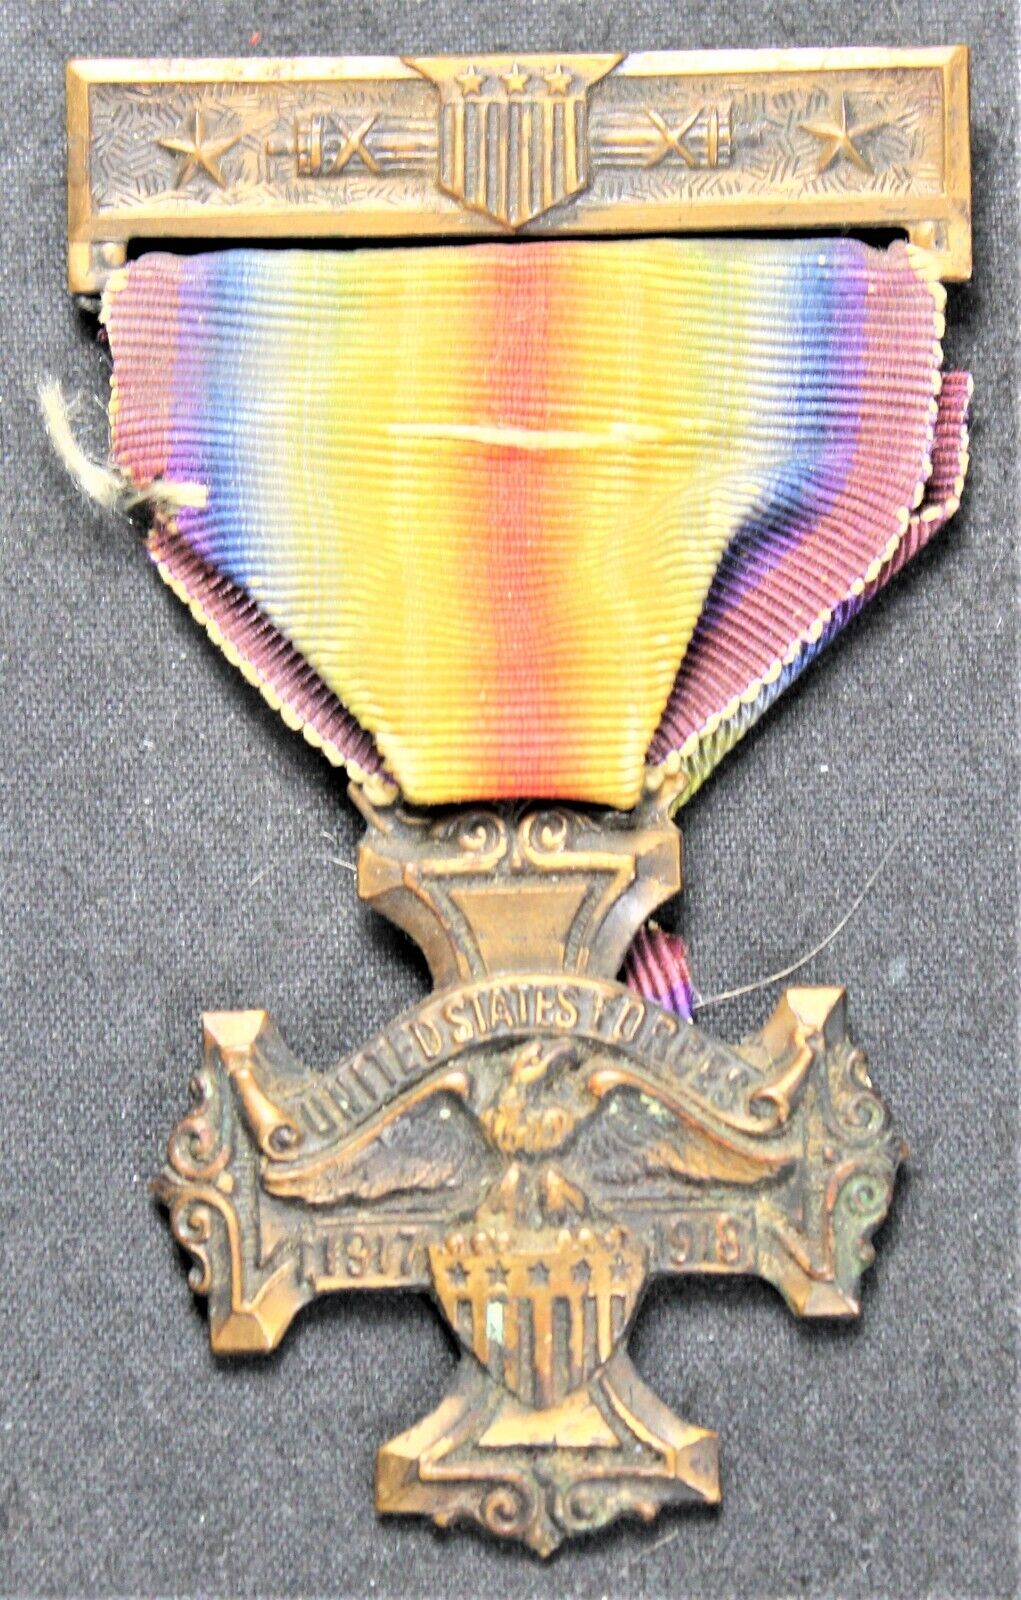 WW1 Service Medal Cross for Harrisonburg, VA - Rockingham County - US - Vintage